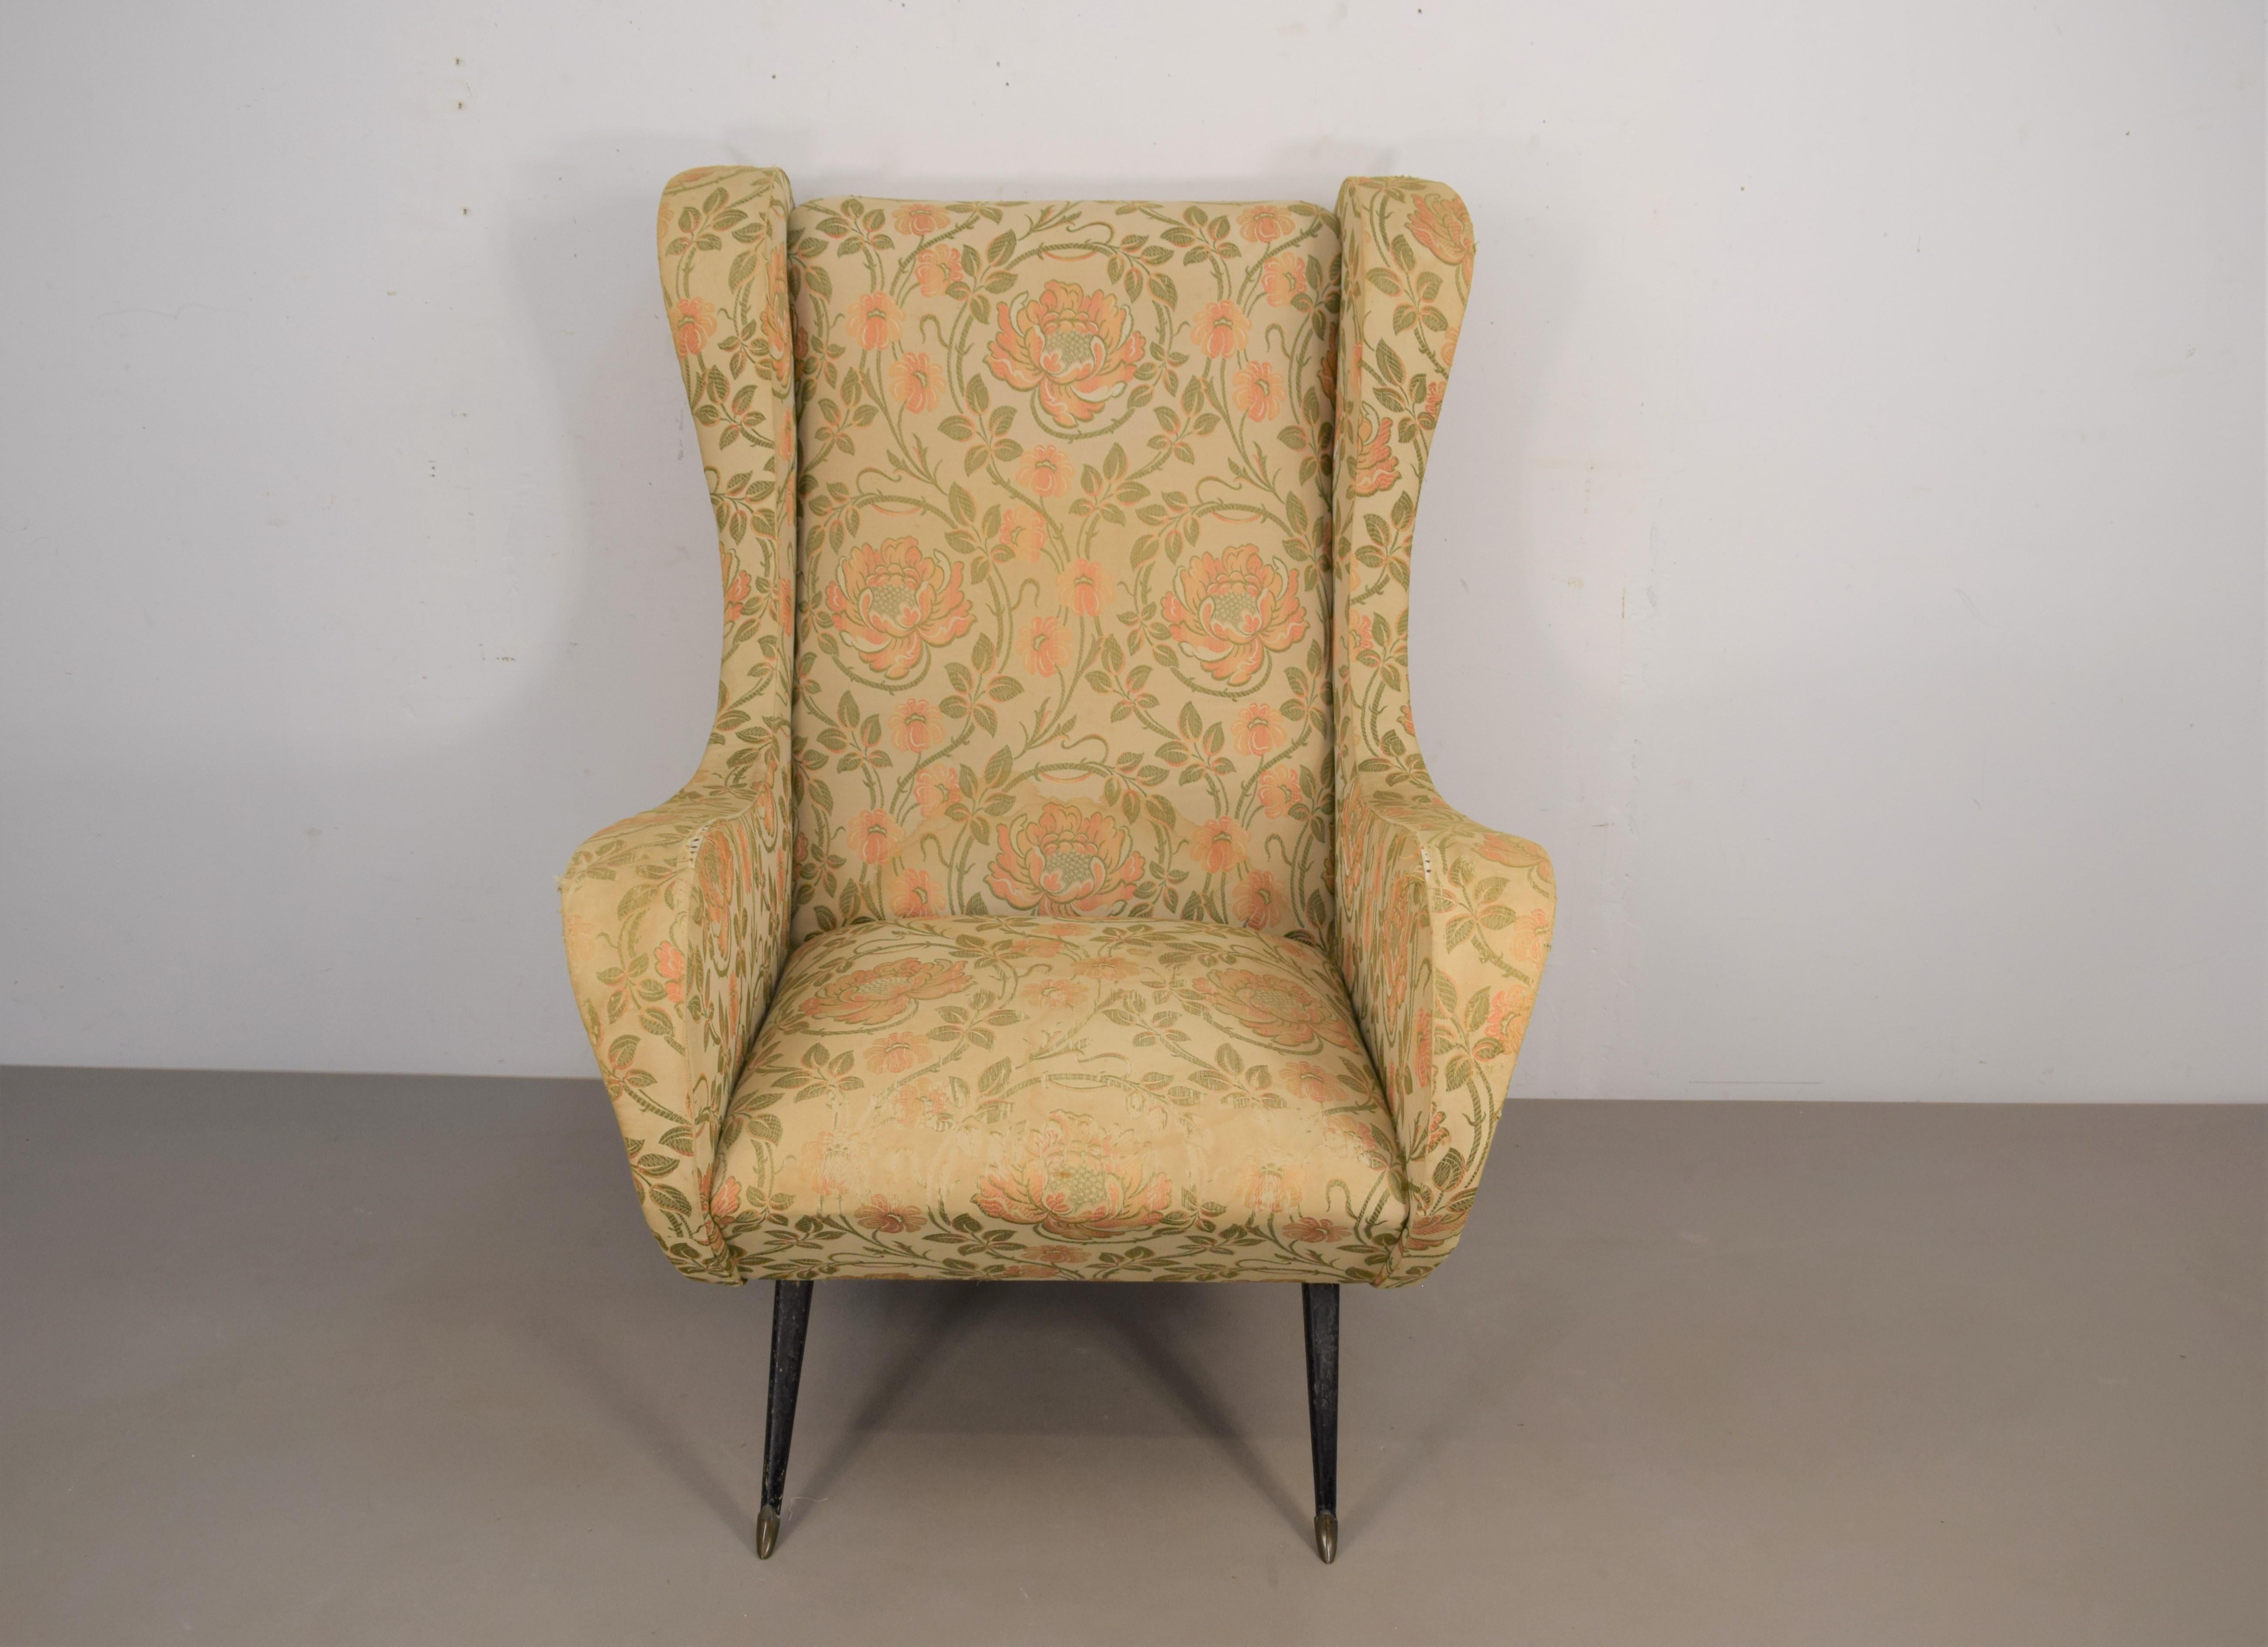 Italian armchair, Marco Zanuso style, 1950s.
Dimensions: H=103 cm; W=84 cm; D=74 cm; seat height = 39 cm.